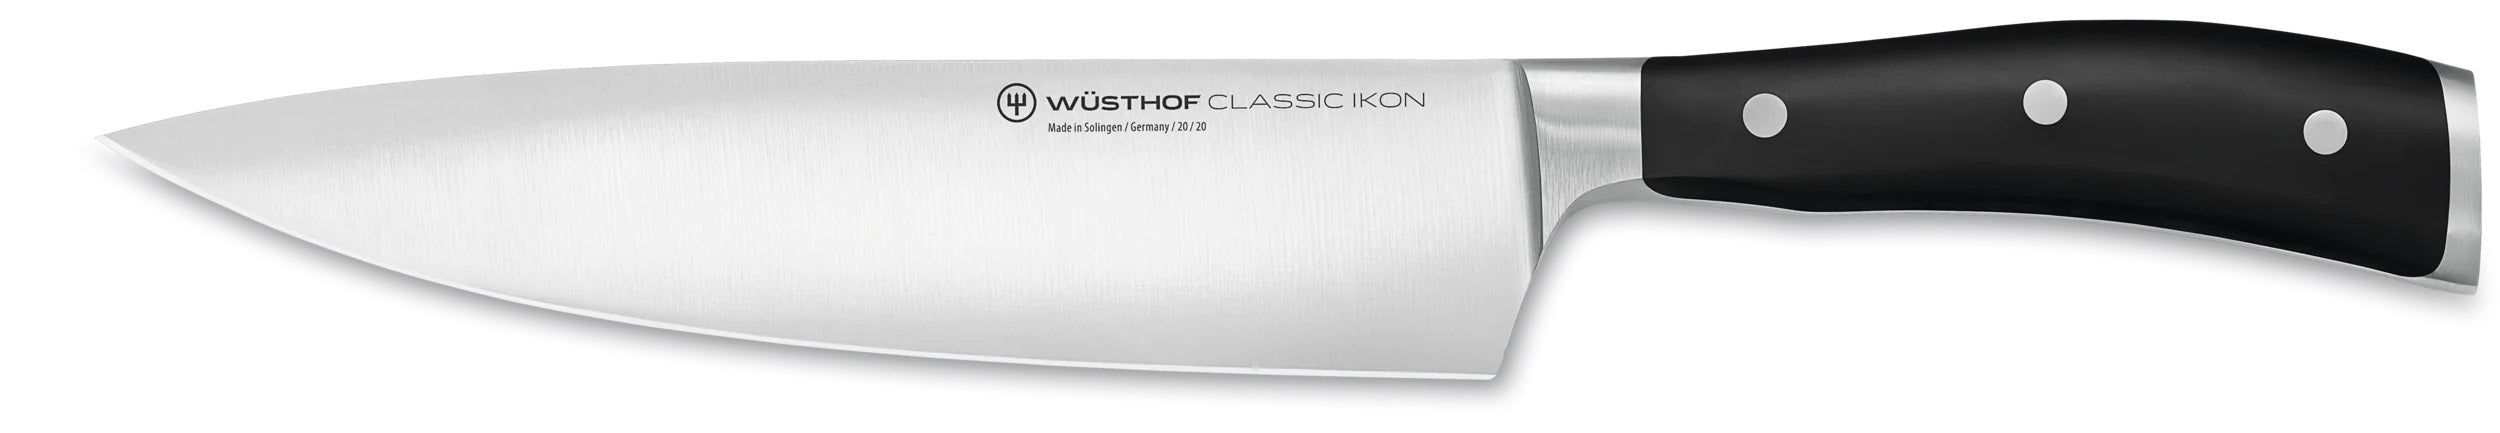 Wusthof Classic Ikon 8" Chef's Knife 1040330120